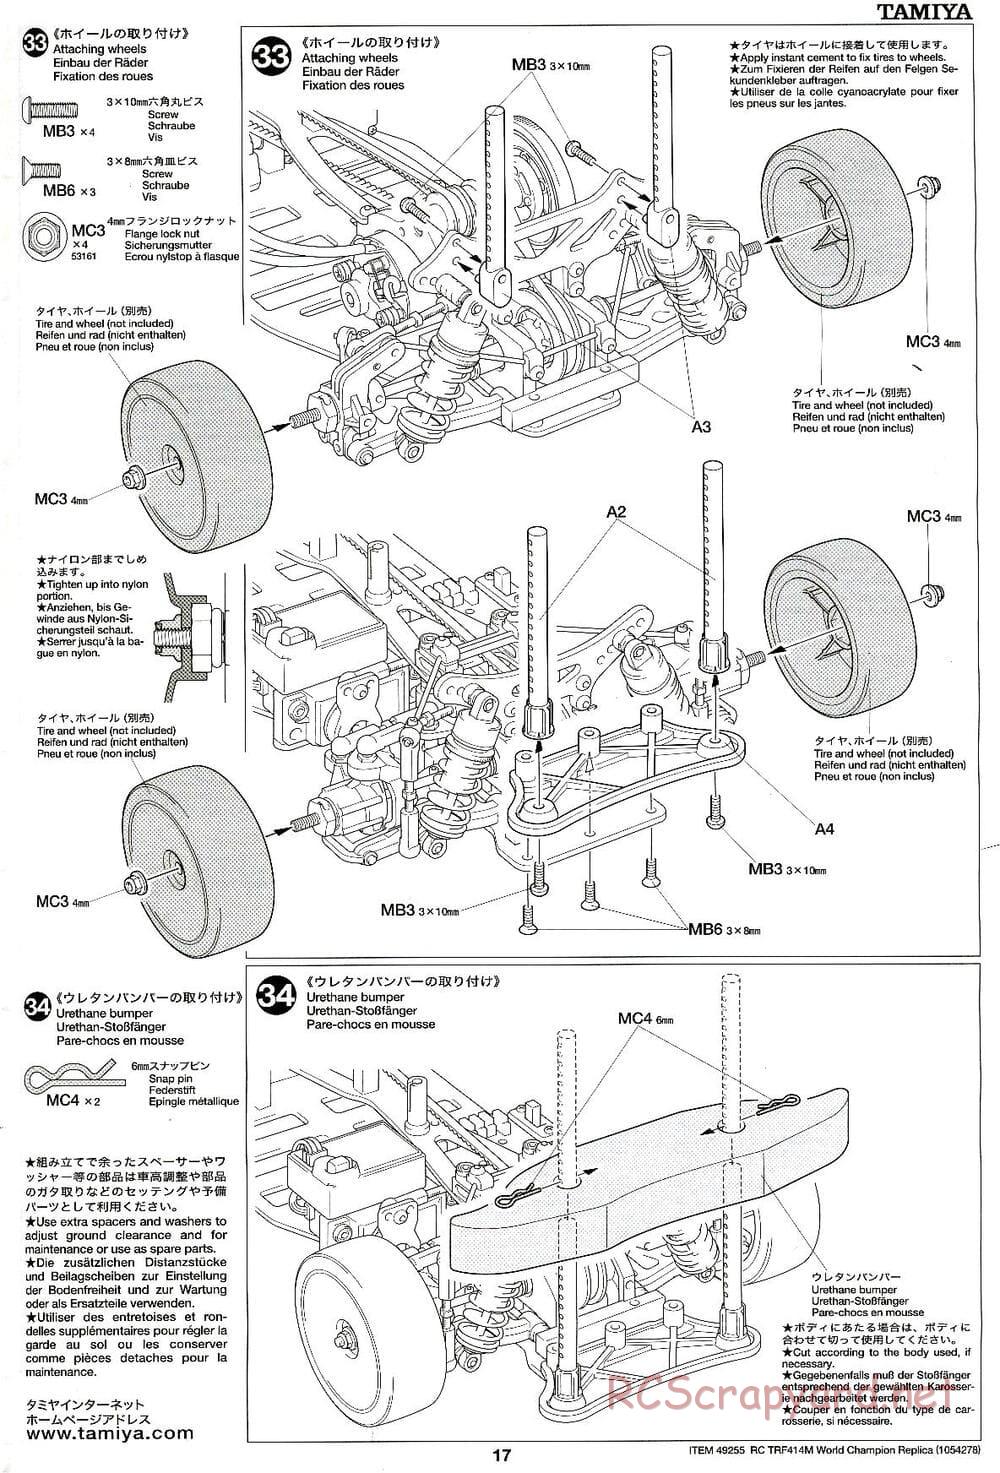 Tamiya - TRF414M World Champion Replica Chassis - Manual - Page 17